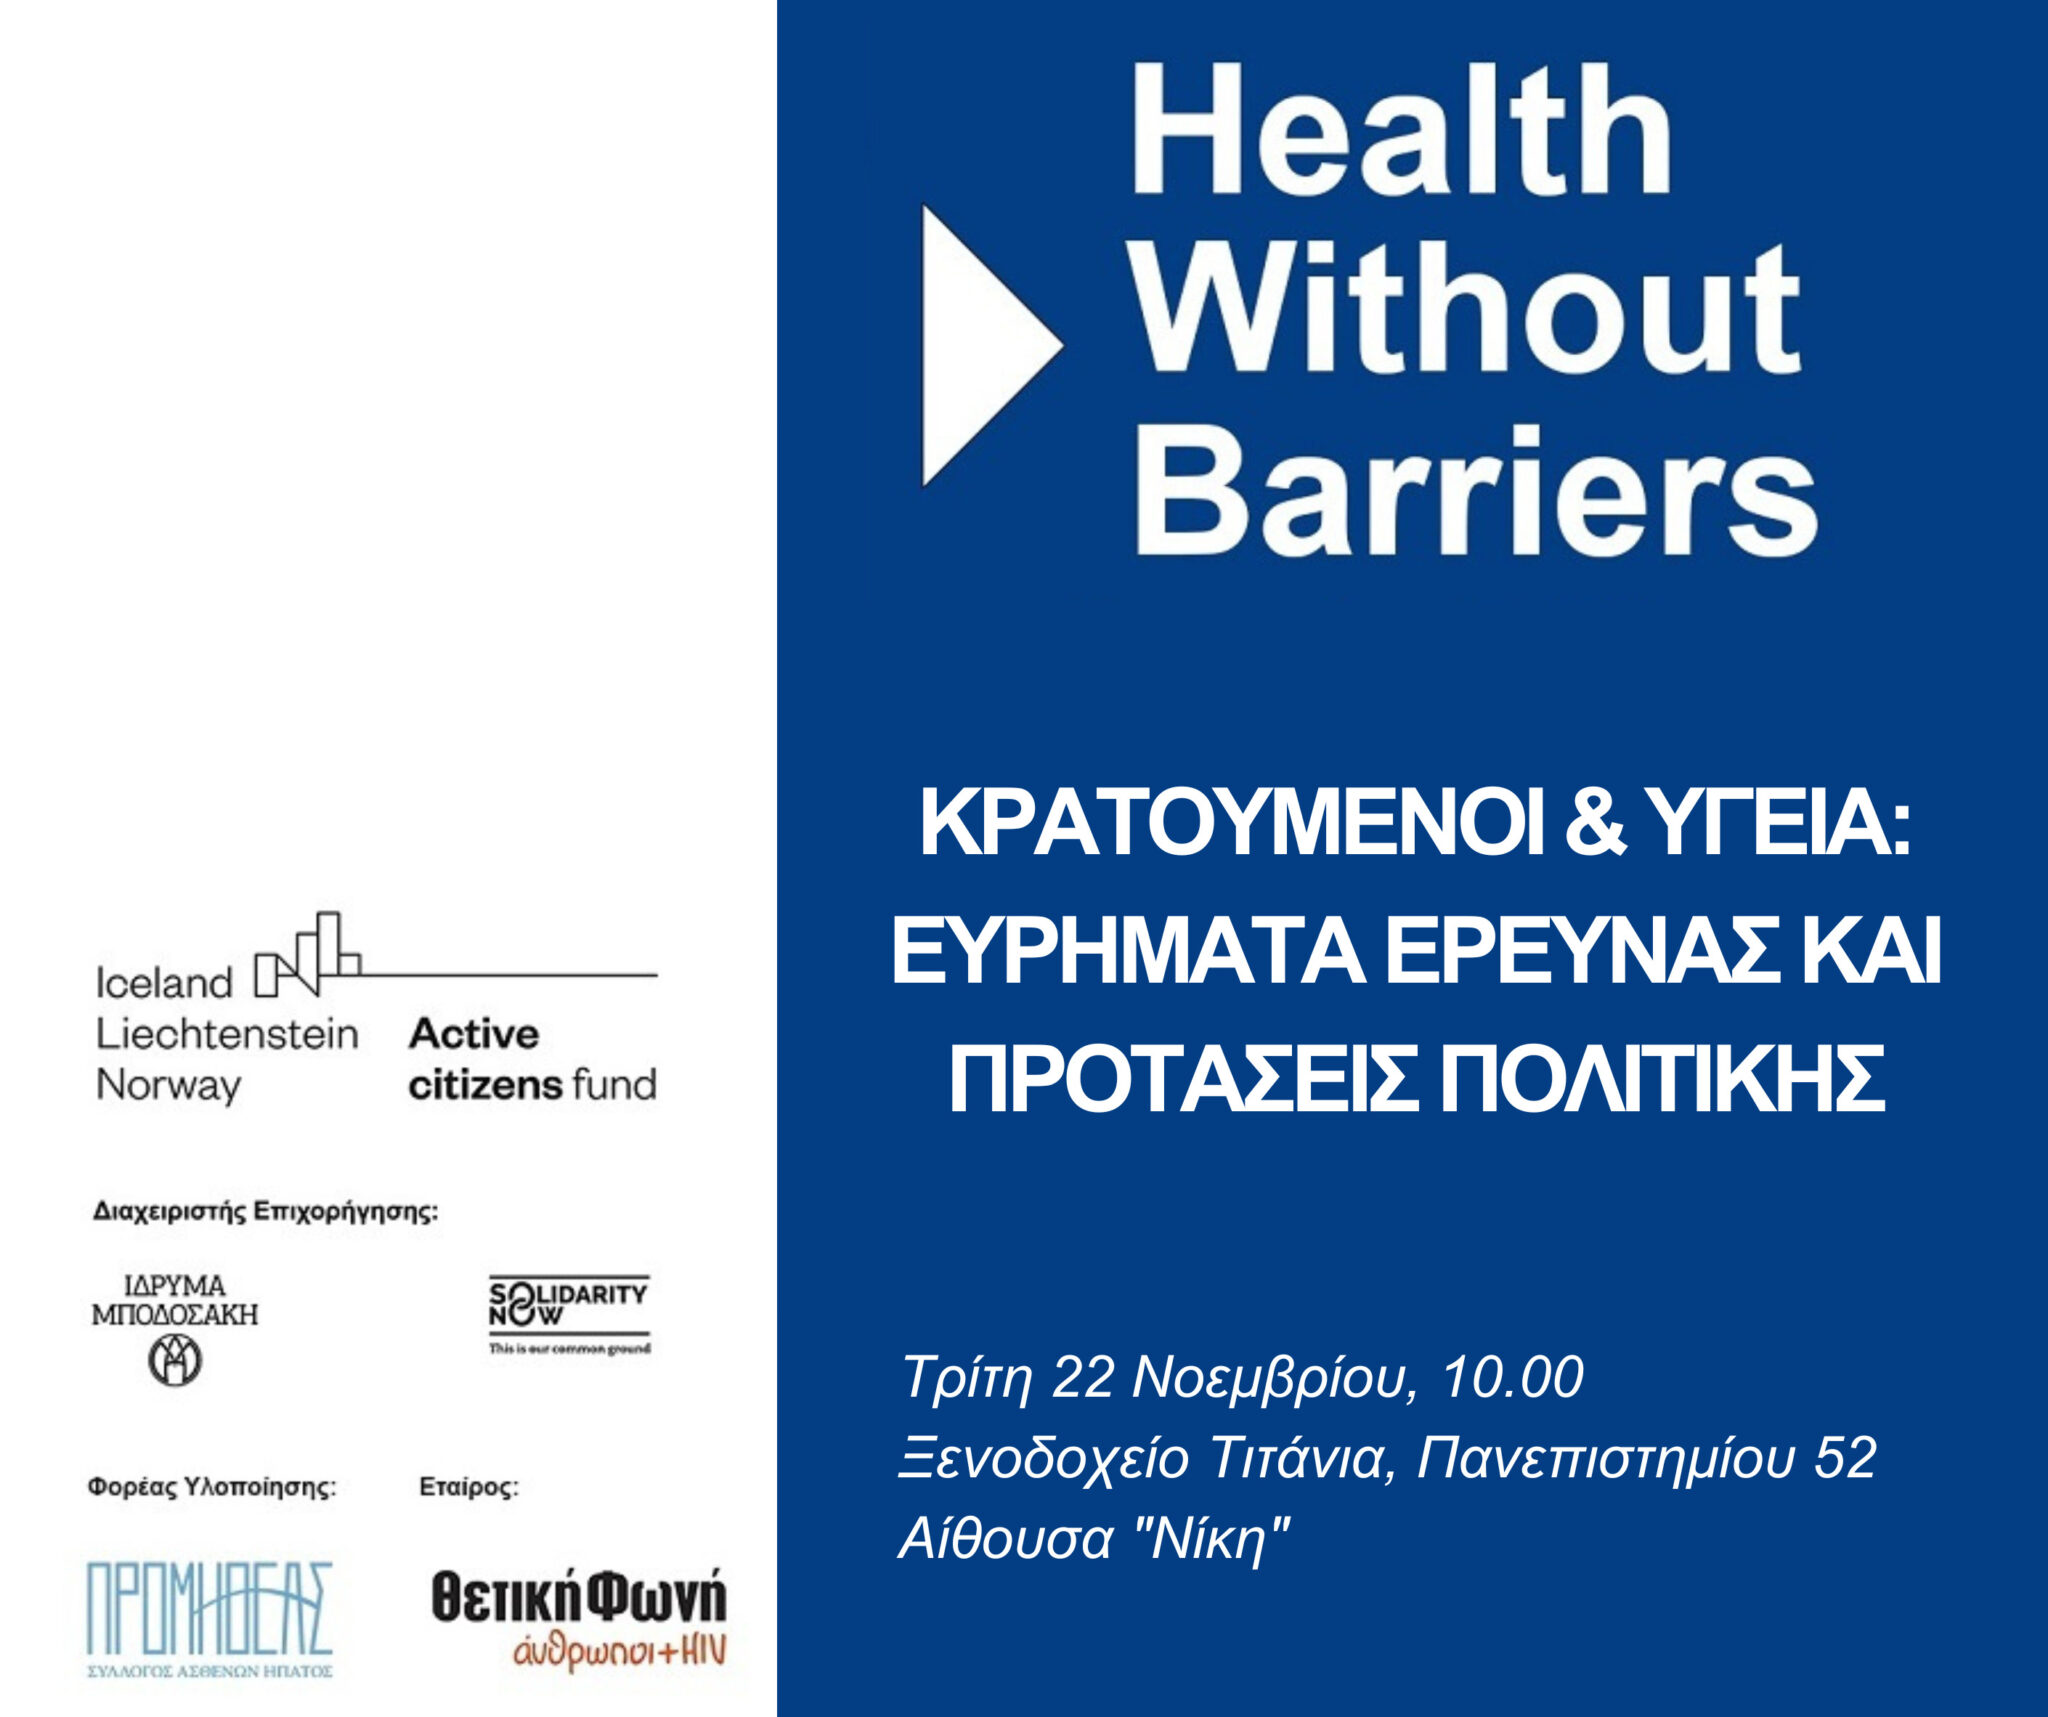 Featured image for “Ημερίδα Health Without Barriers: ”Η ανεμπόδιστη πρόσβαση των κρατουμένων σε υπηρεσίες υγείας είναι θεμελιώδες δικαίωμα””